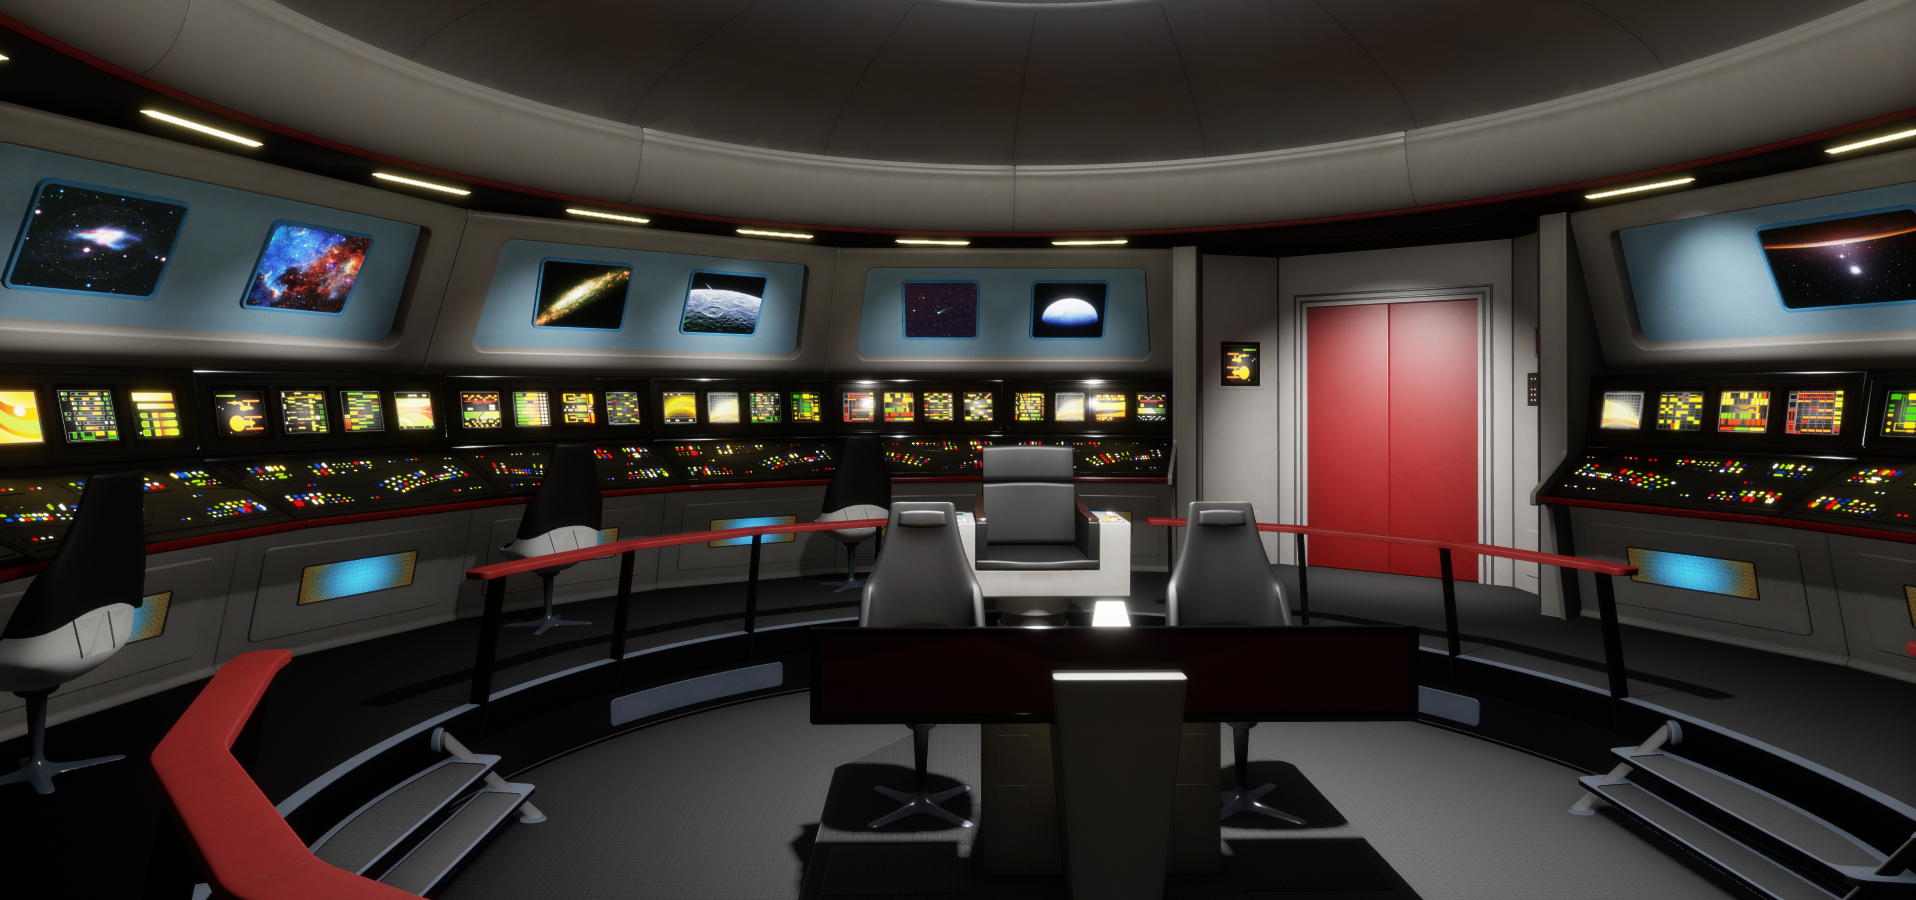 Star Trek Strange New Worlds  Which Deck Do They Keep the Whales On   More Enterprise Design Secrets  Den of Geek